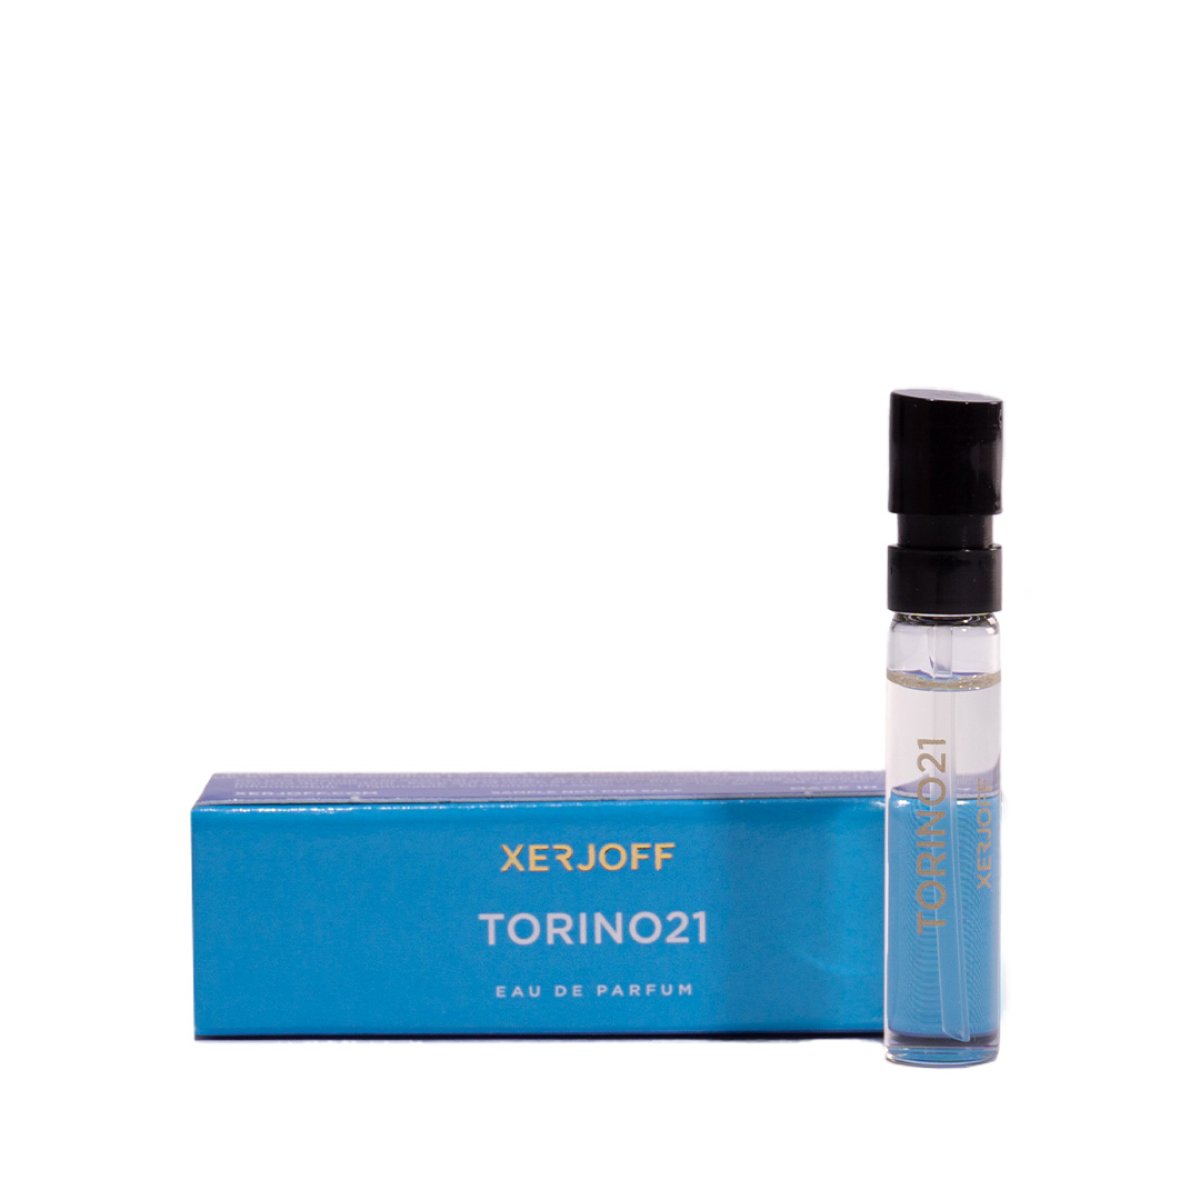 Xerjoff TORINO21 EDP sample (2 ml) von Xerjoff